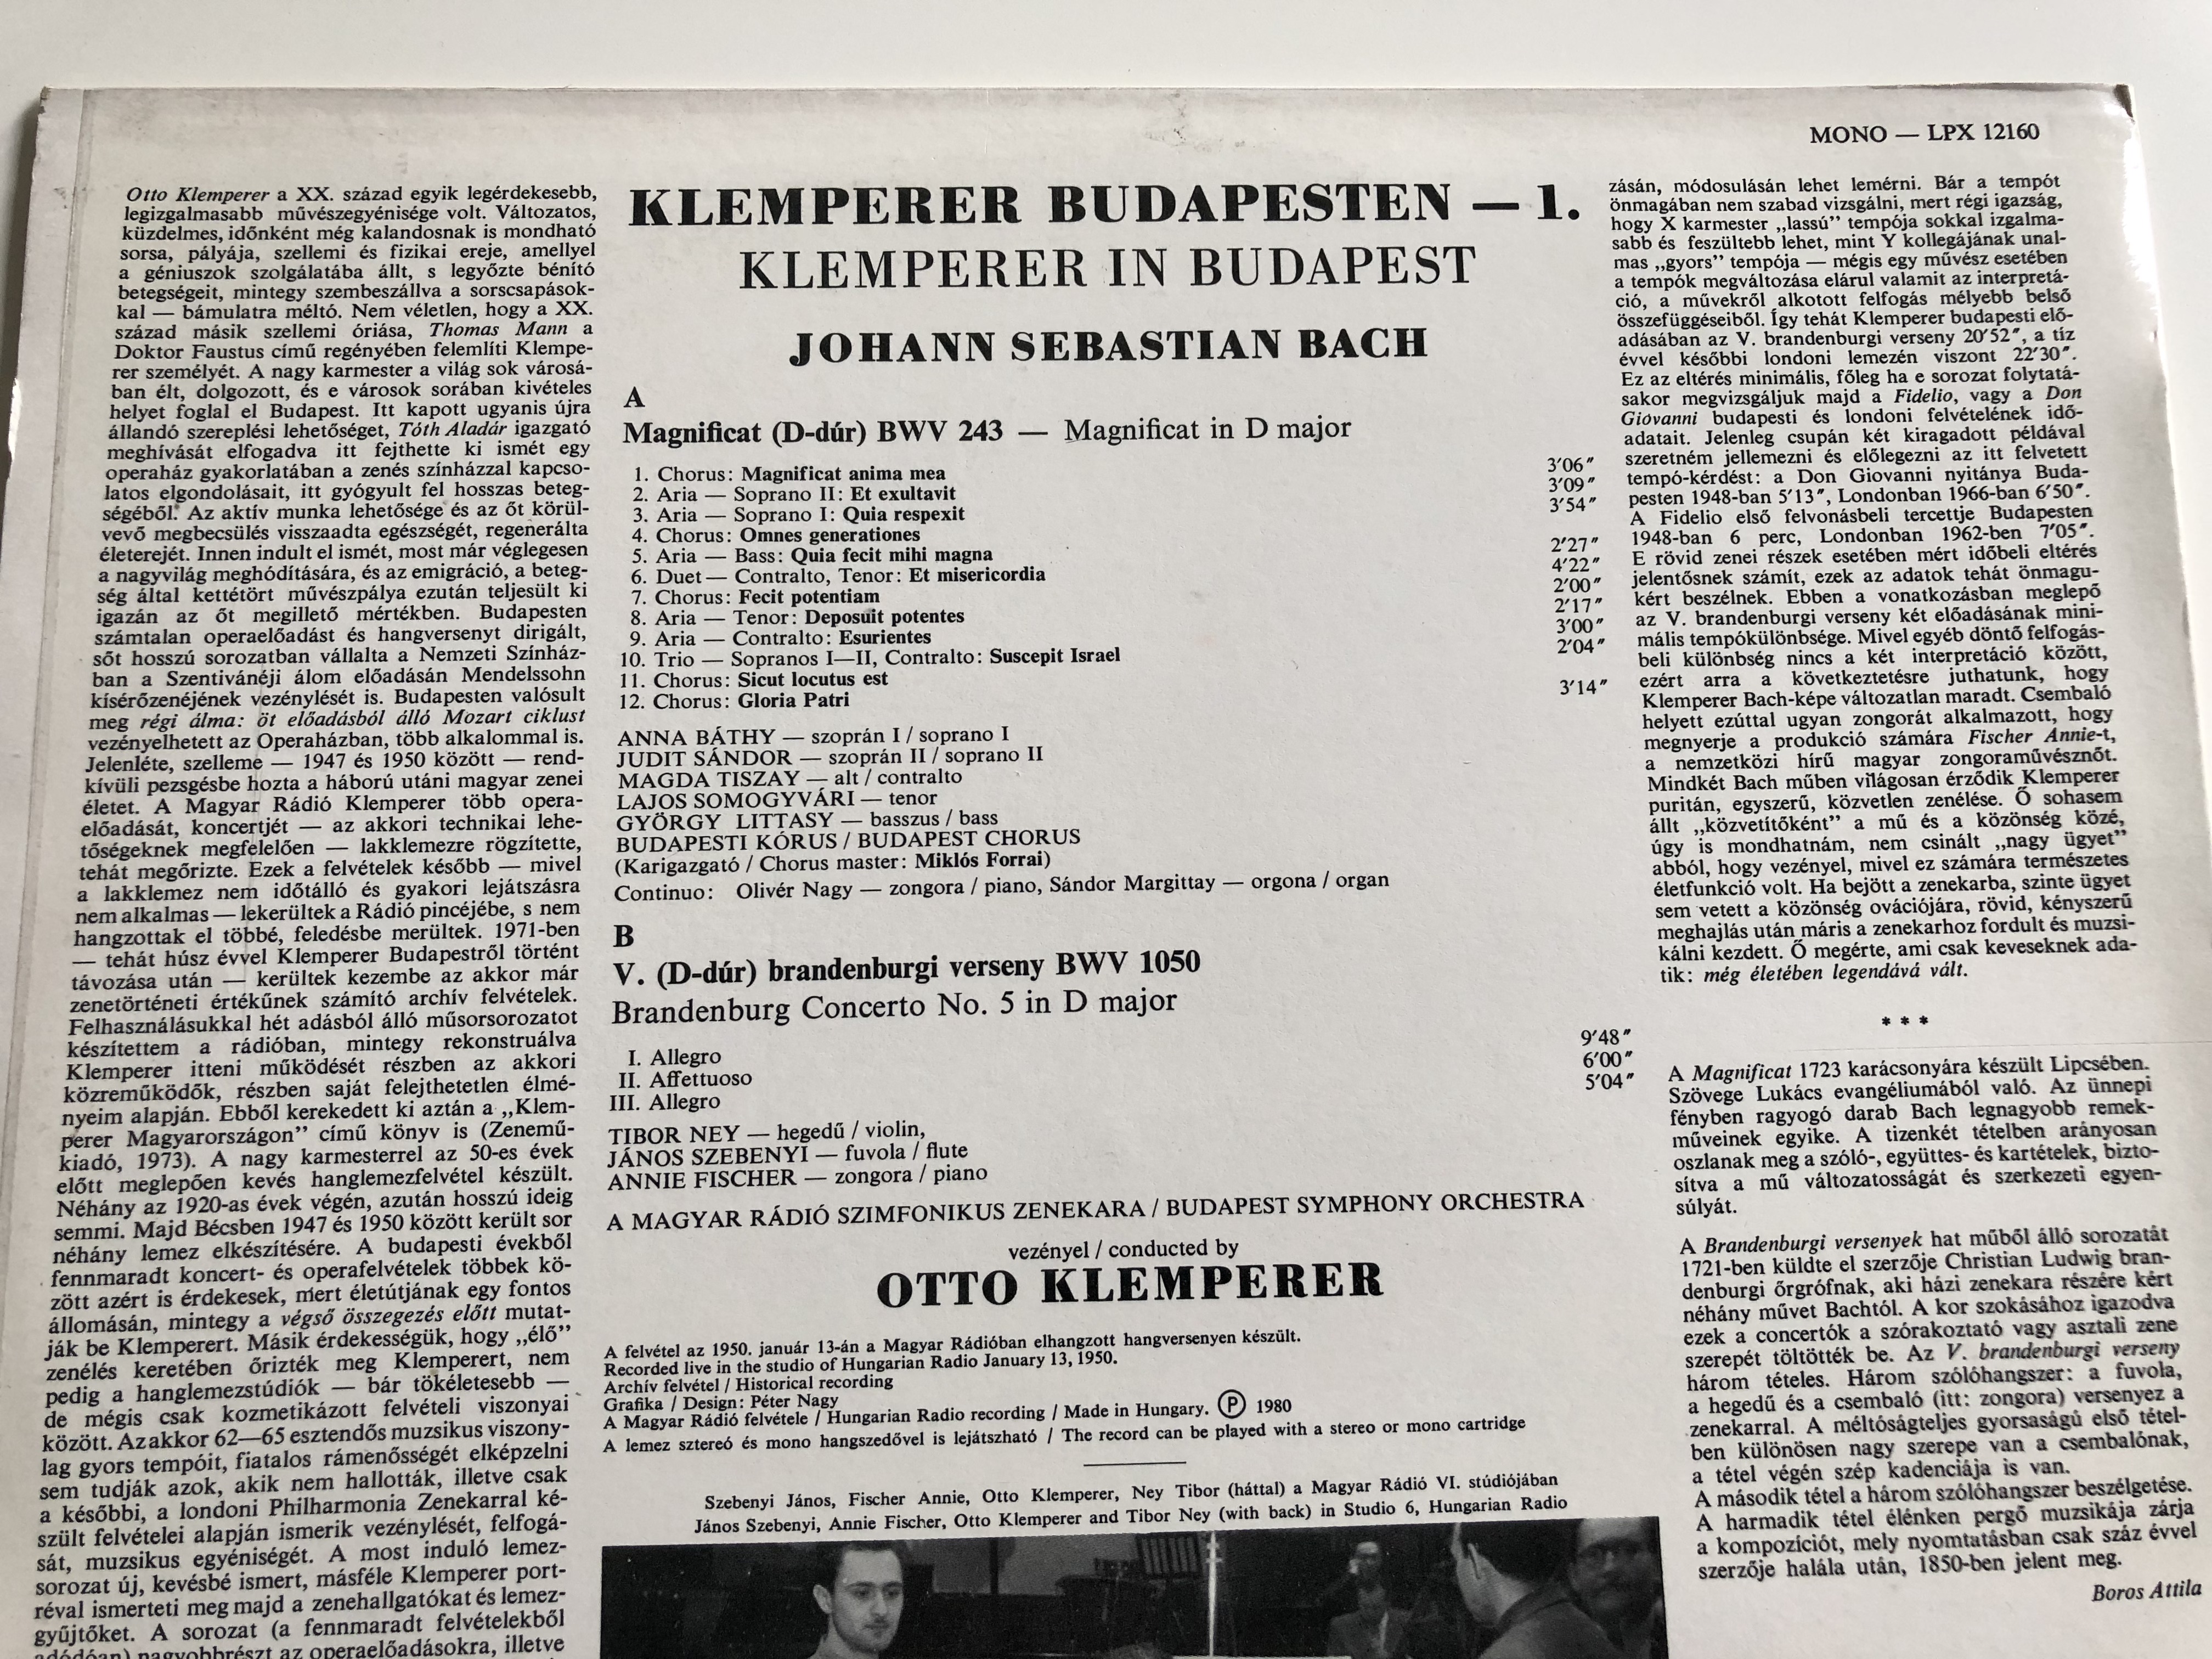 klemperer-j.-s.-bach-magnificat-brandenburg-concerto-no.-5-in-budapest-1948-50-live-recordings-1.-hungaroton-lp-mono-lpx-12160-3-.jpg